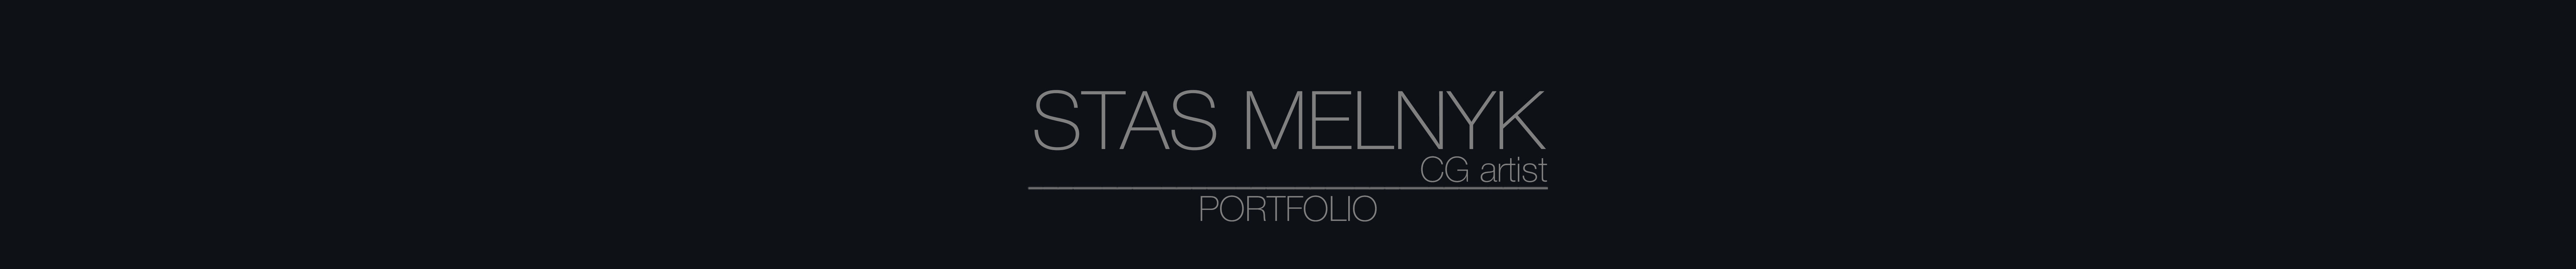 Stas Melnyk's profile banner